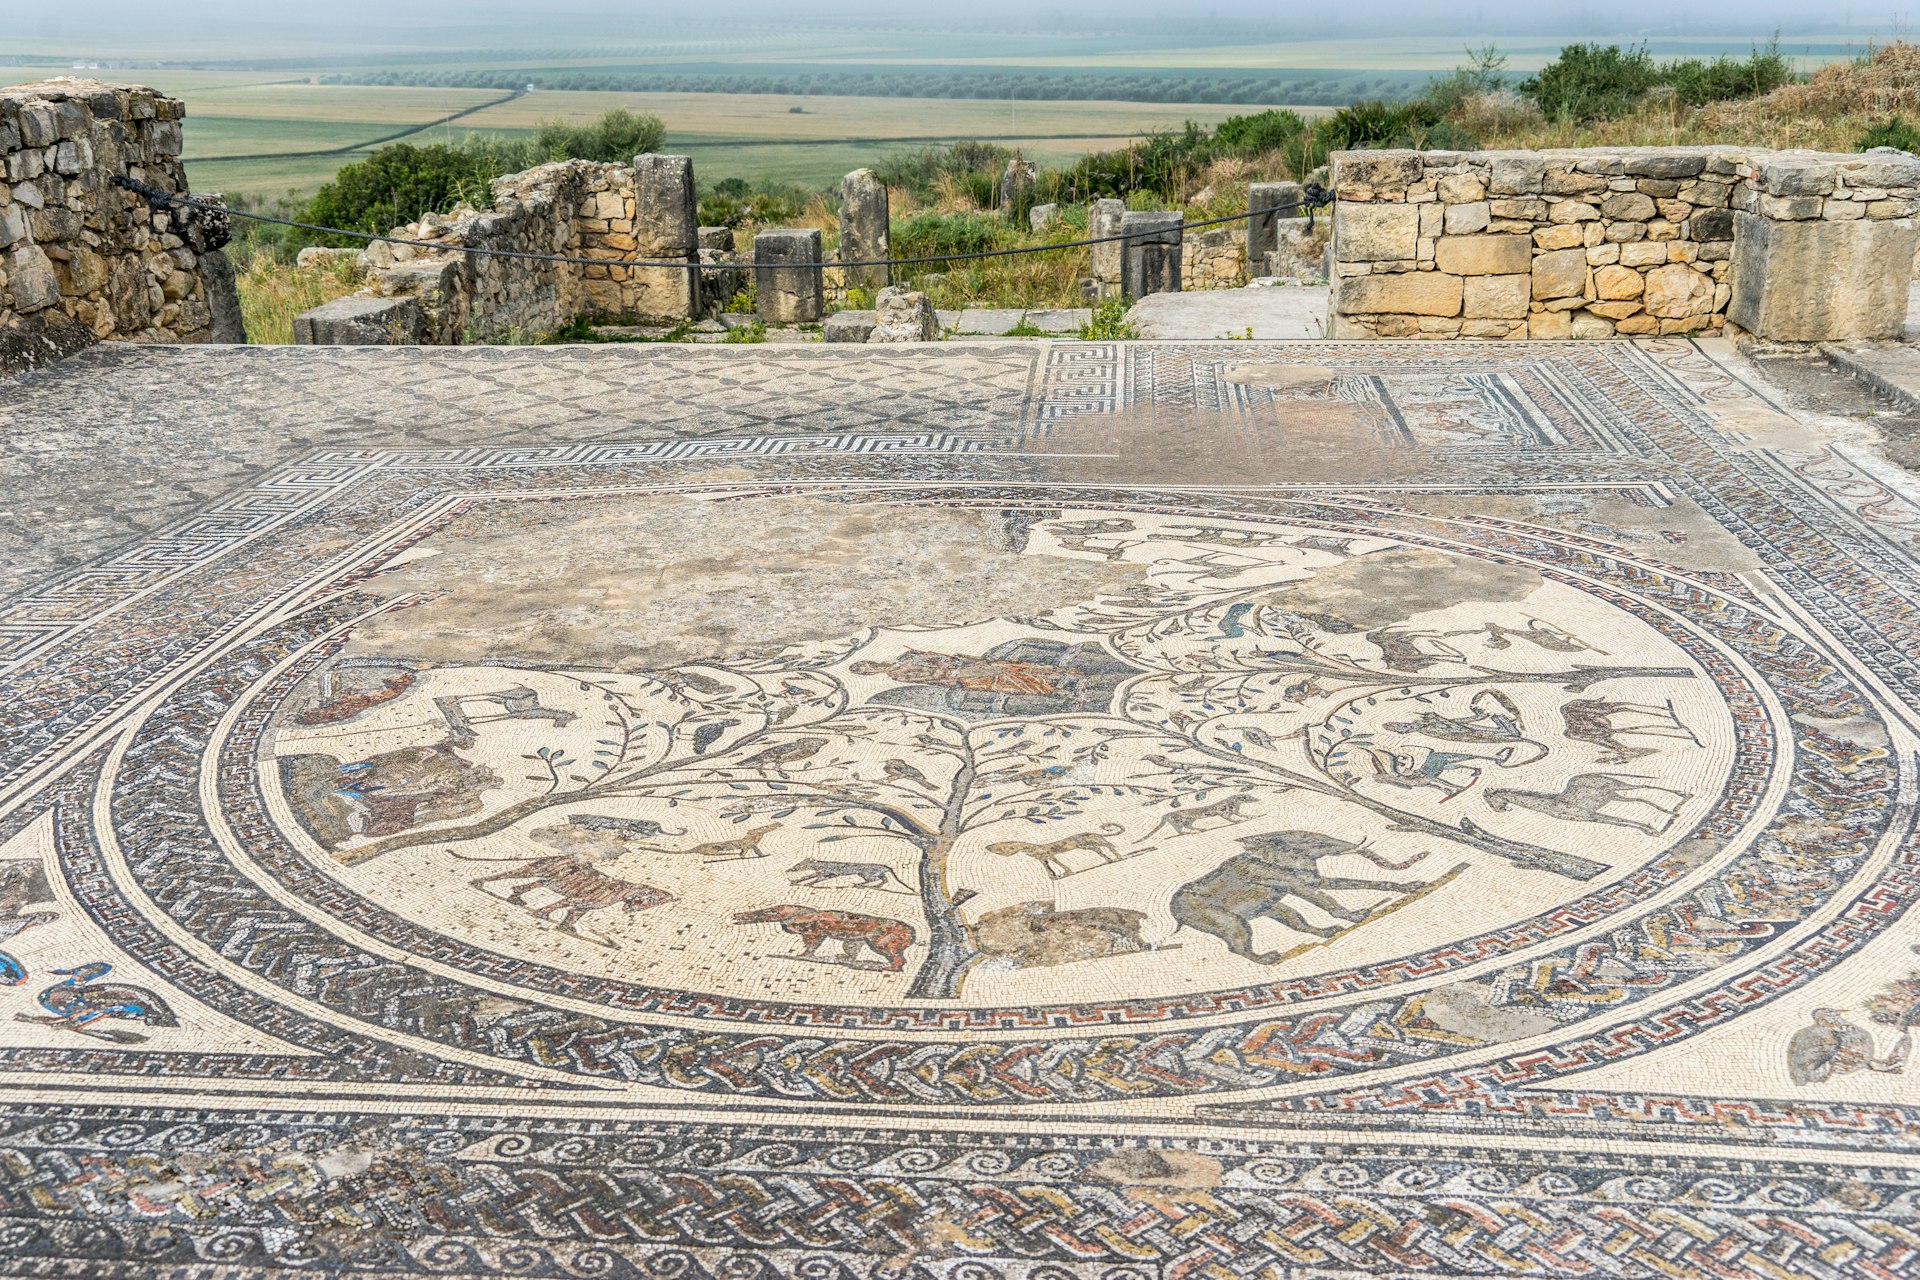 Mosaic floor in the Volubilis ruins, Morocco